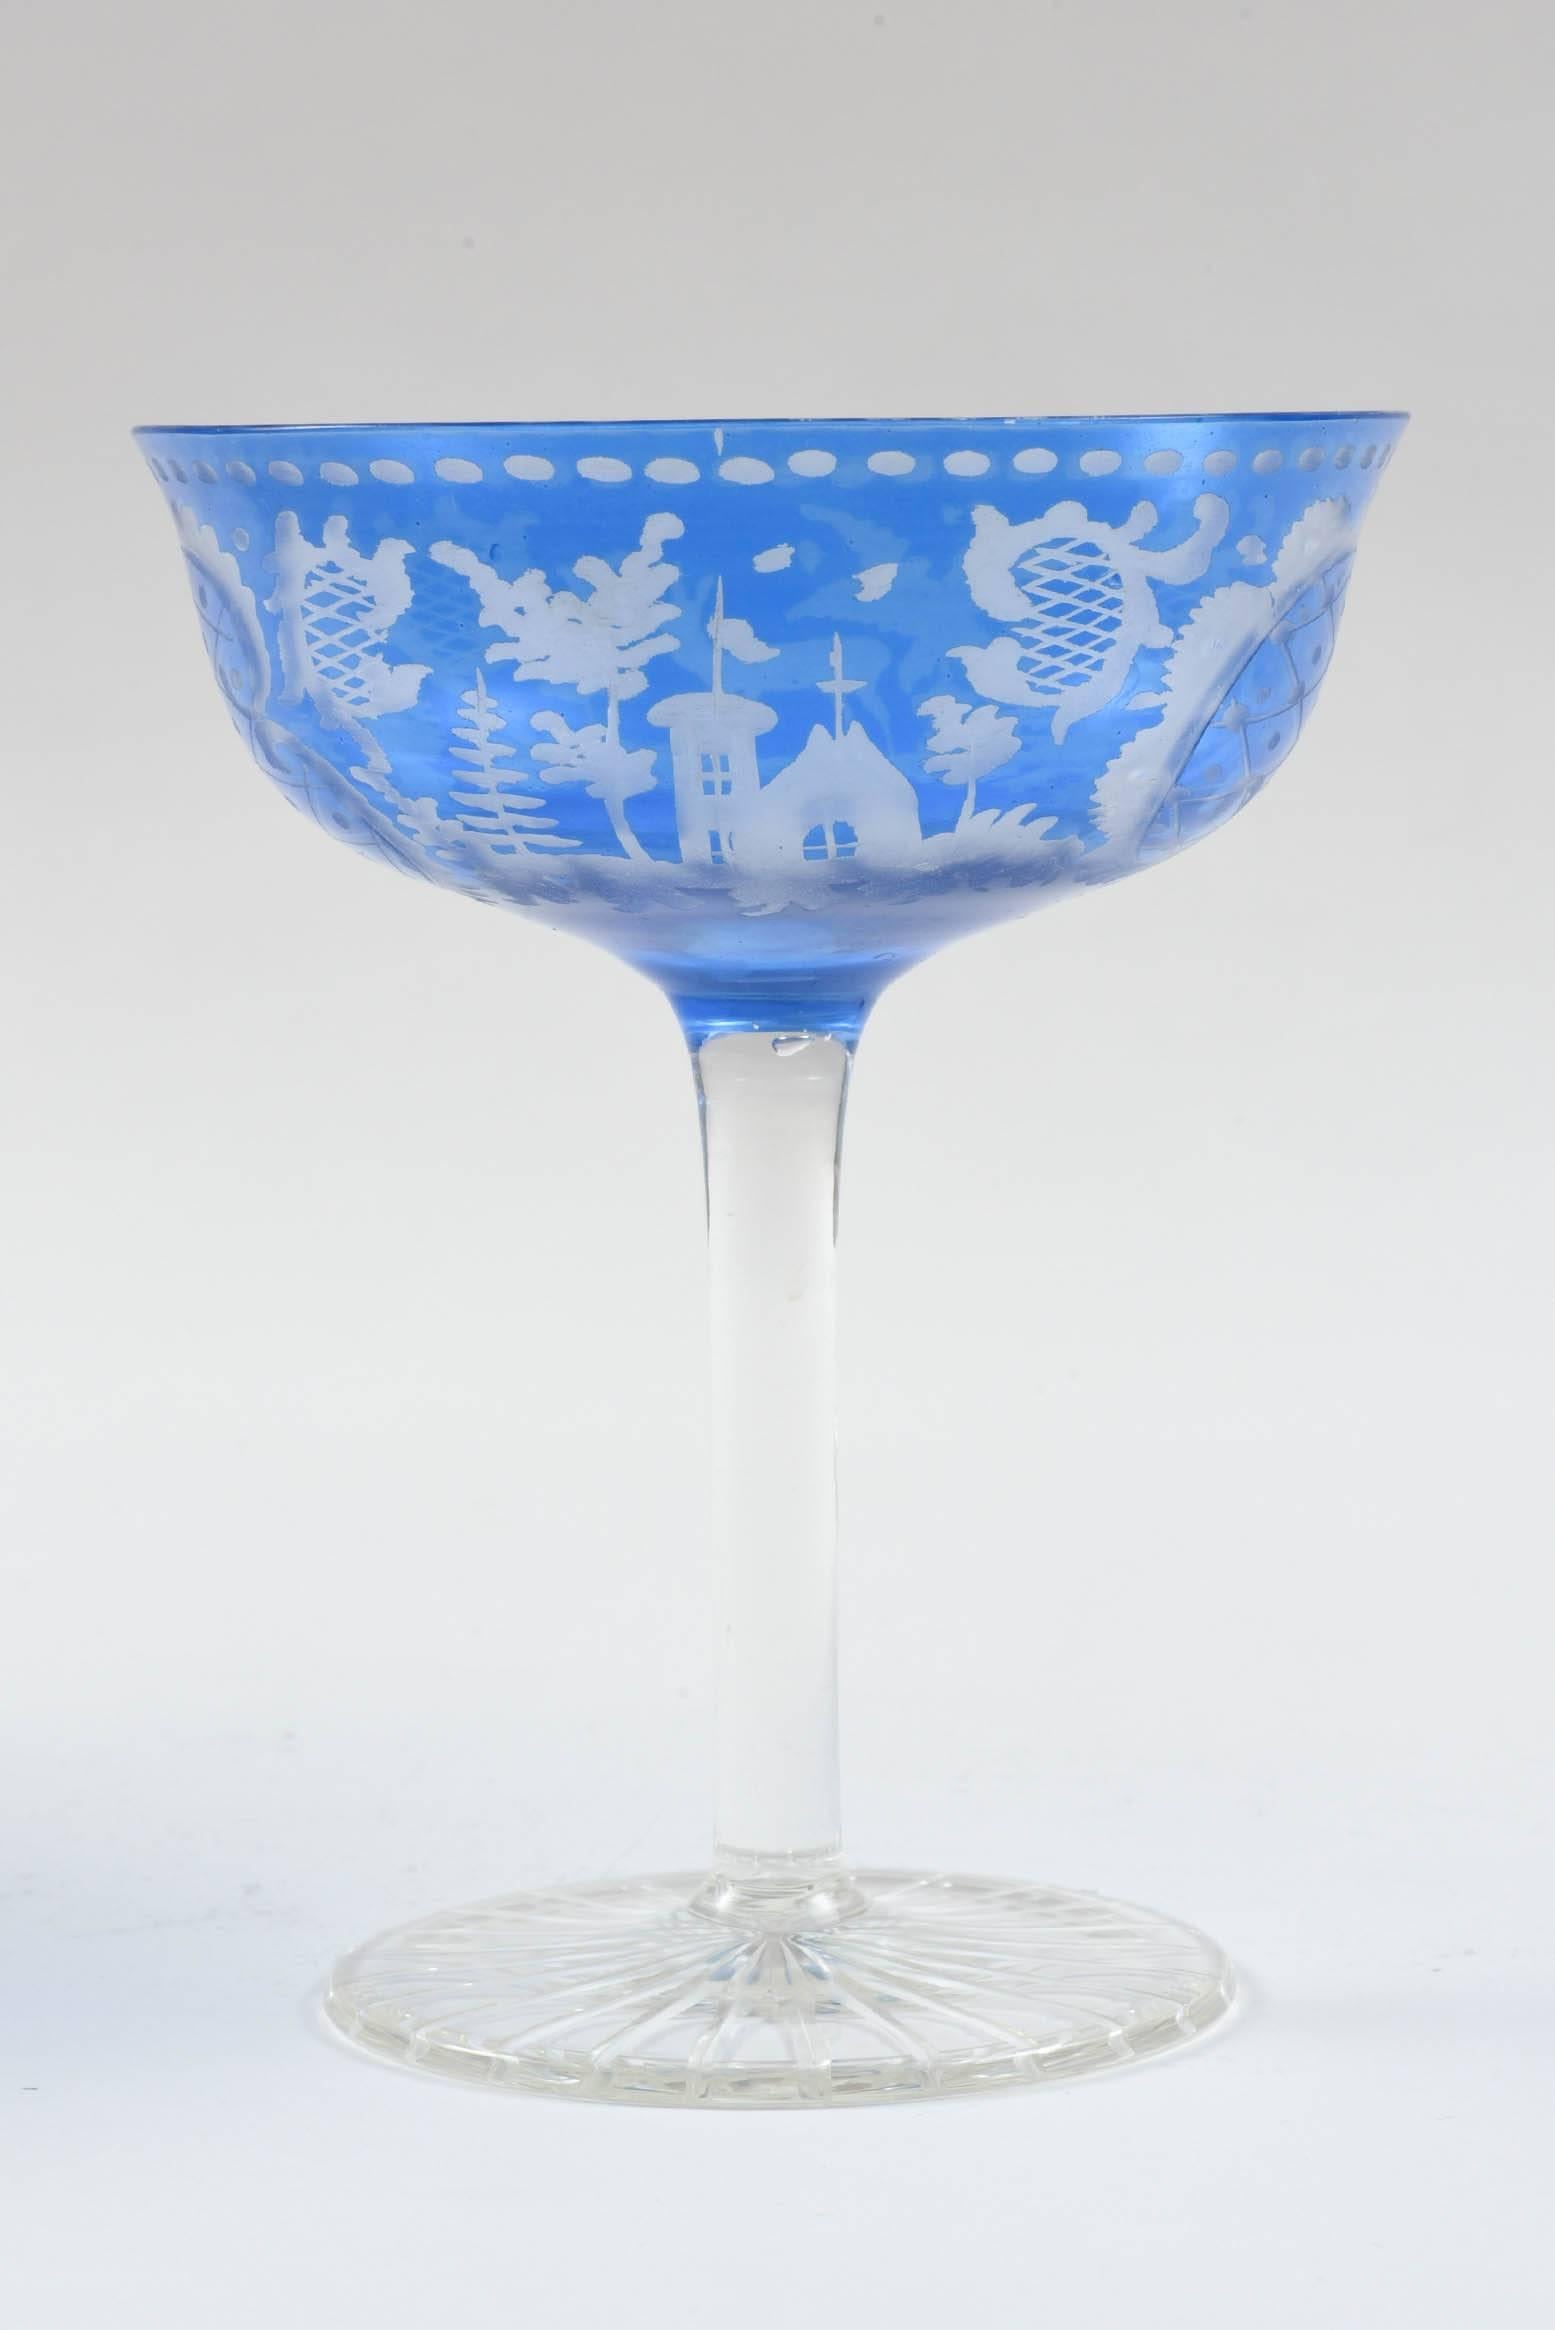 Bohemian Blue Crystal Stemware Service for 12, Great Color & Goblet Size. Antique & Rare